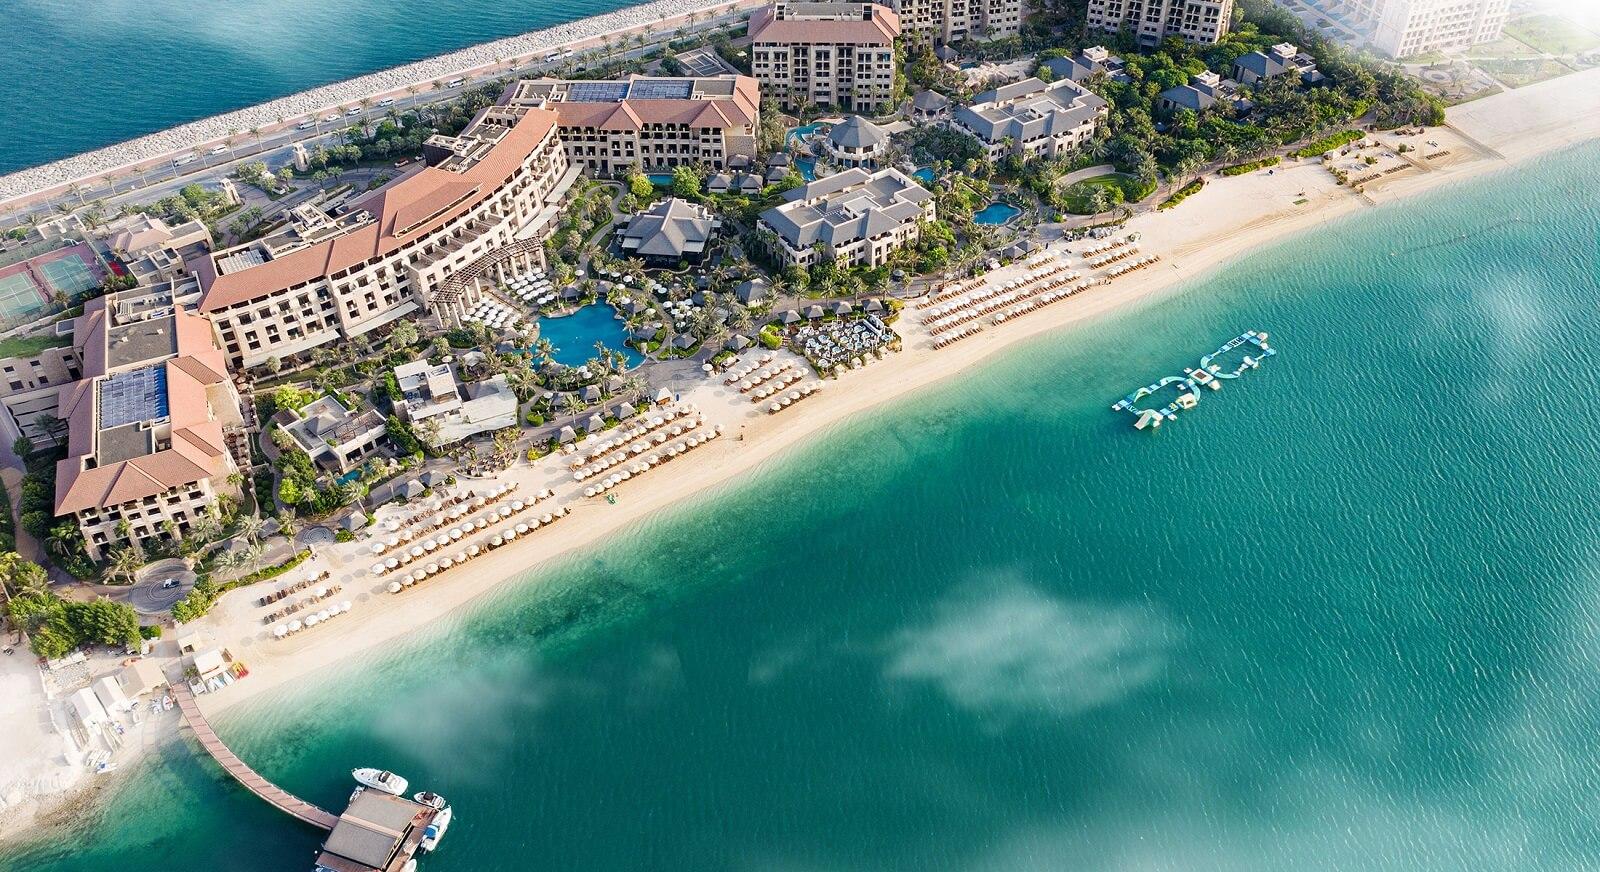 Sofitel Dubai The Palm Aerial View